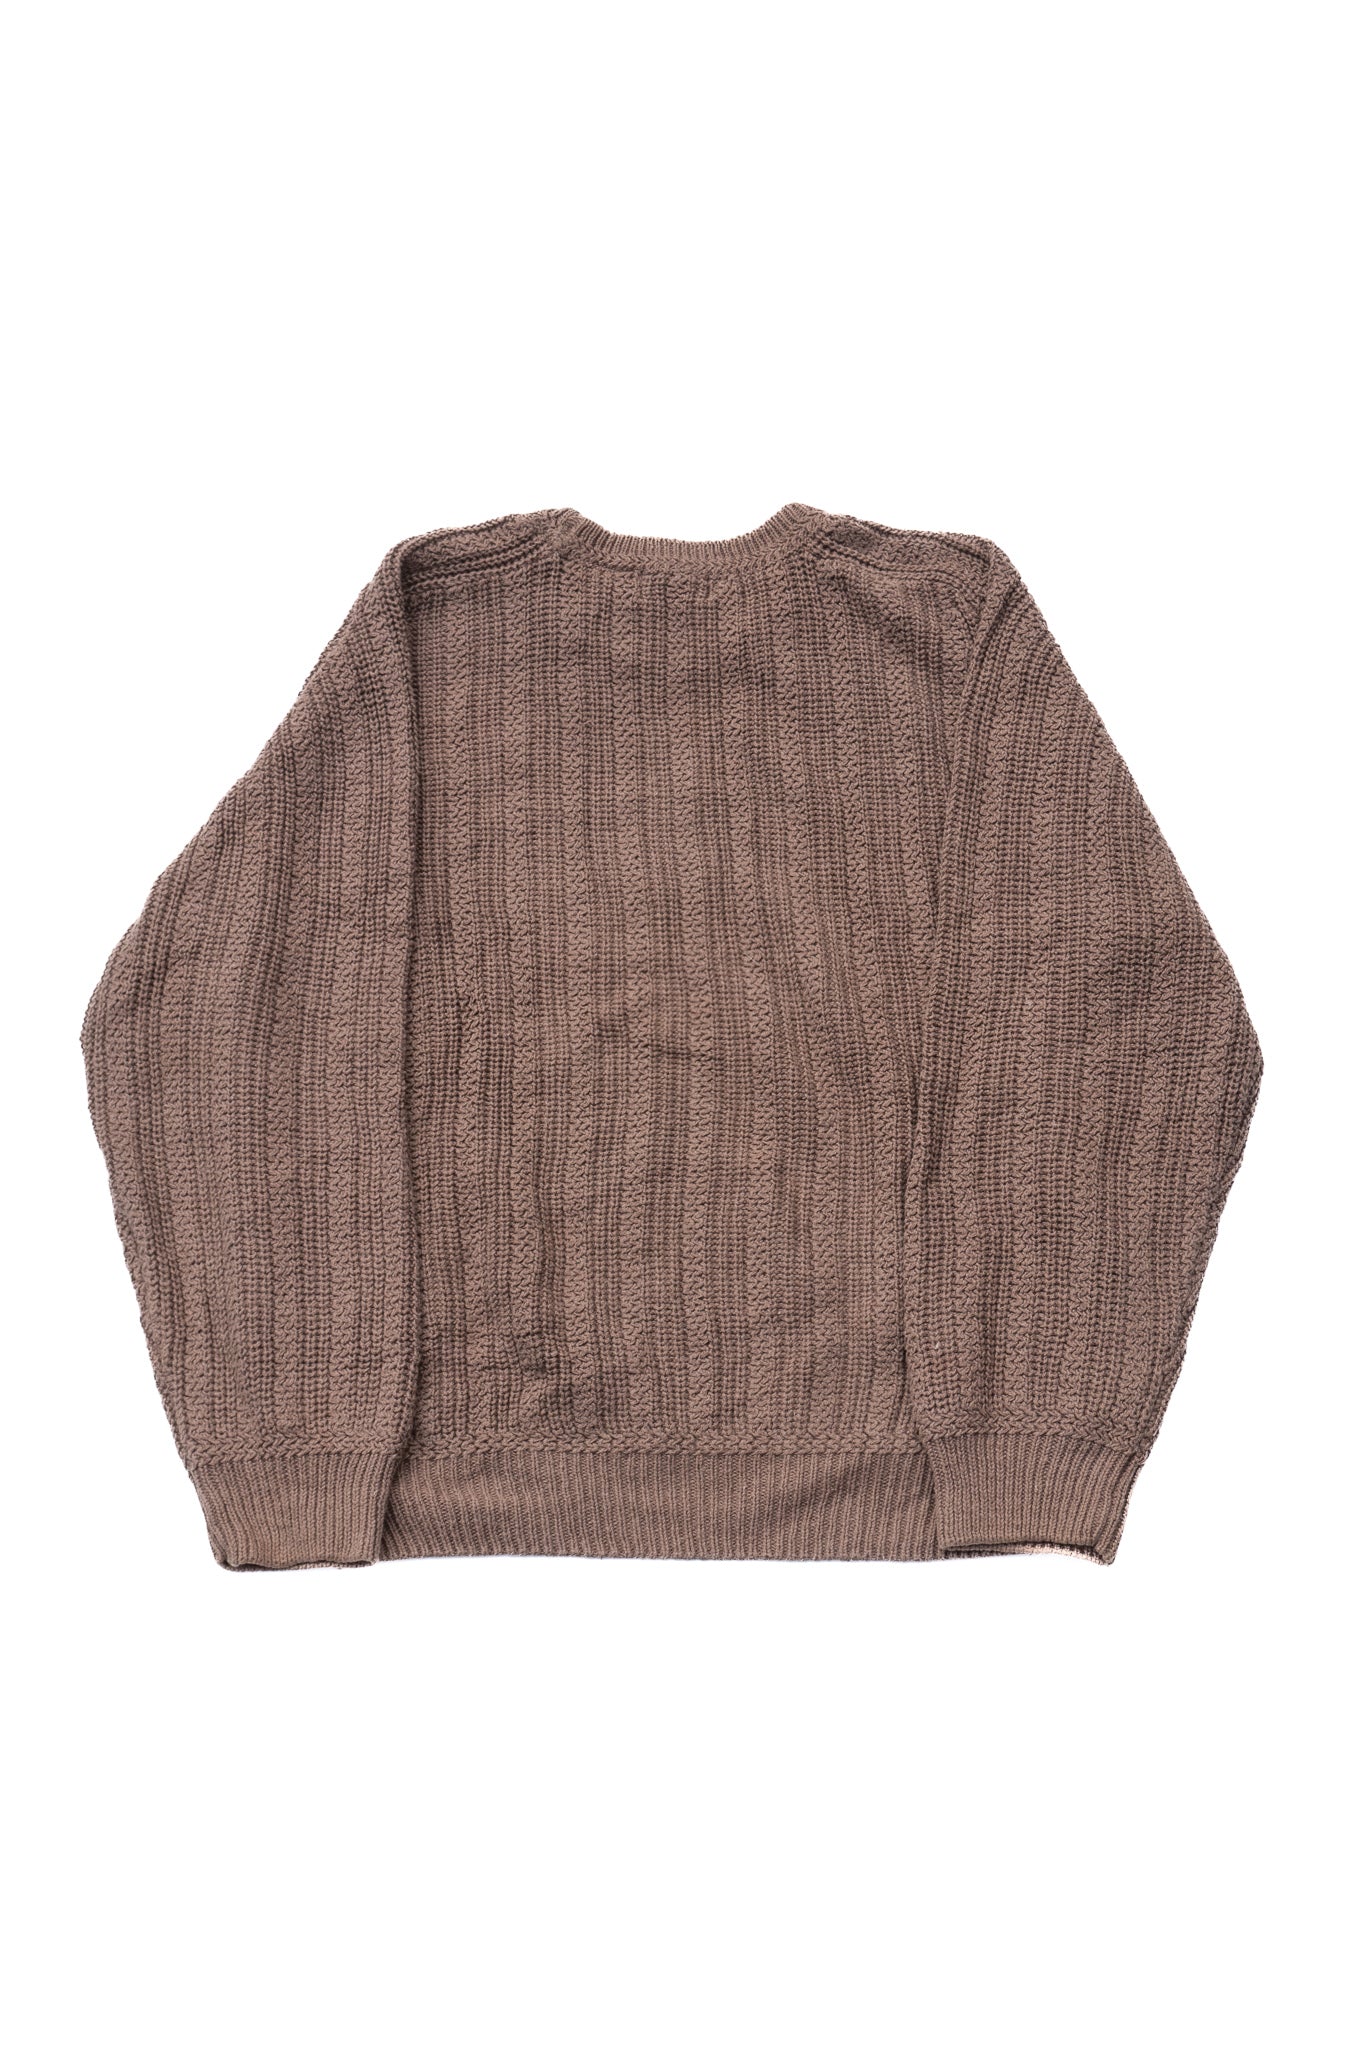 St. John's Bay Light Brown Knitted Sweater